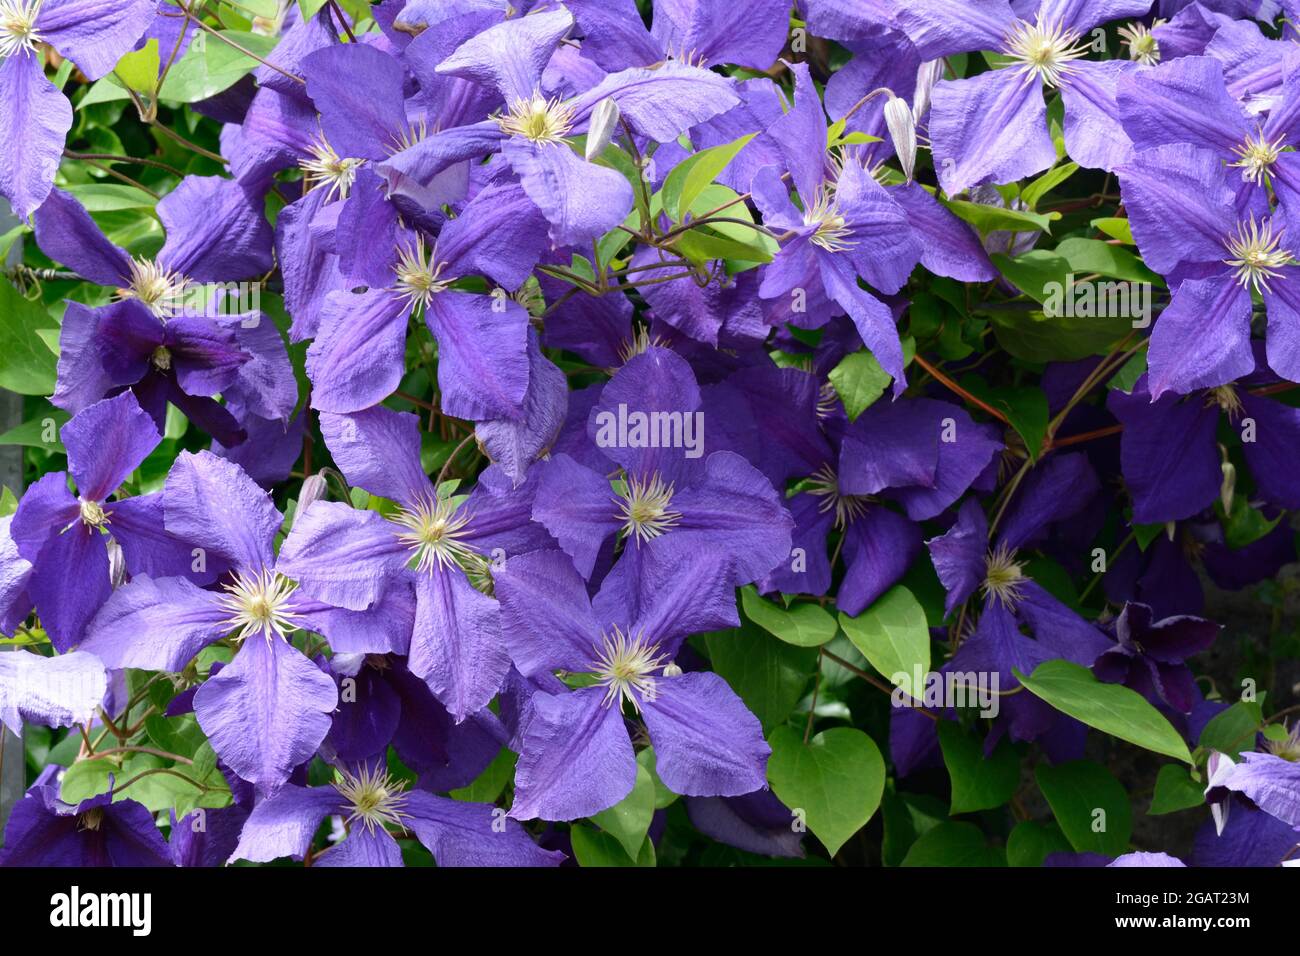 Clematis jackmanii Superba late large flowering purple clematis flowers Stock Photo